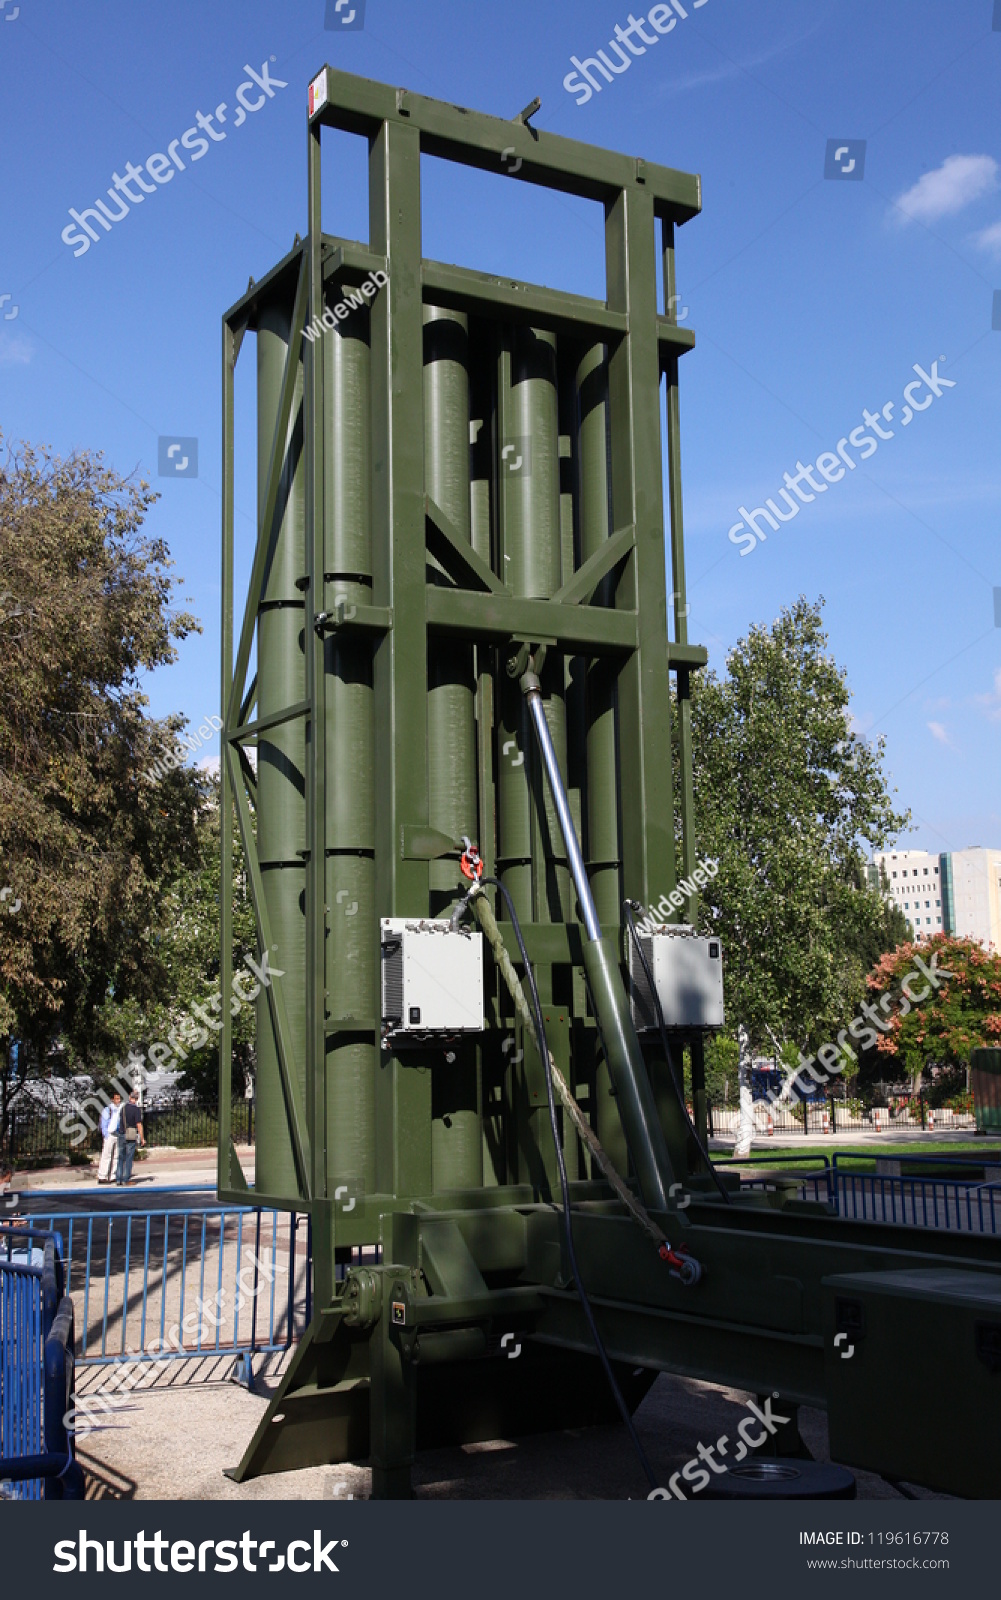 stock-photo-jerusalem-israel-november-barak-air-missile-defense-system-launcher-on-display-in-the-119616778.jpg